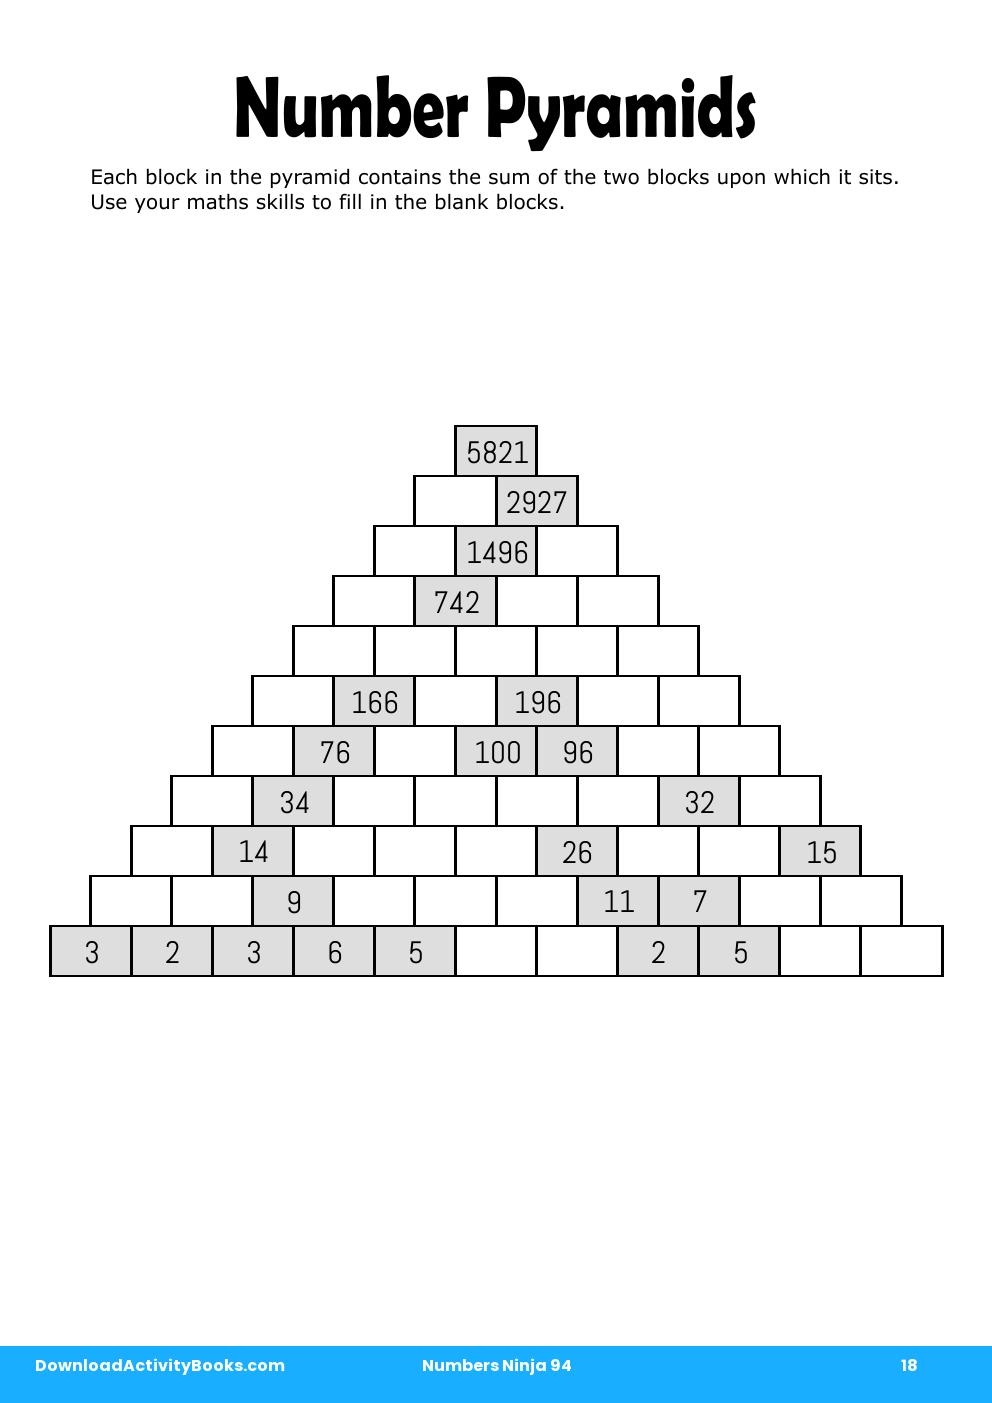 Number Pyramids in Numbers Ninja 94